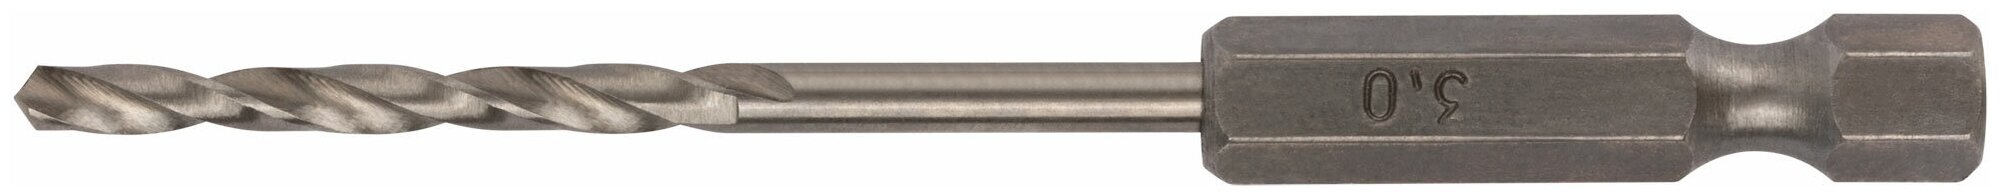 Сверло HSS по металлу, полированное, U-хвостовик под биту, инд. упаковка 3,0 мм